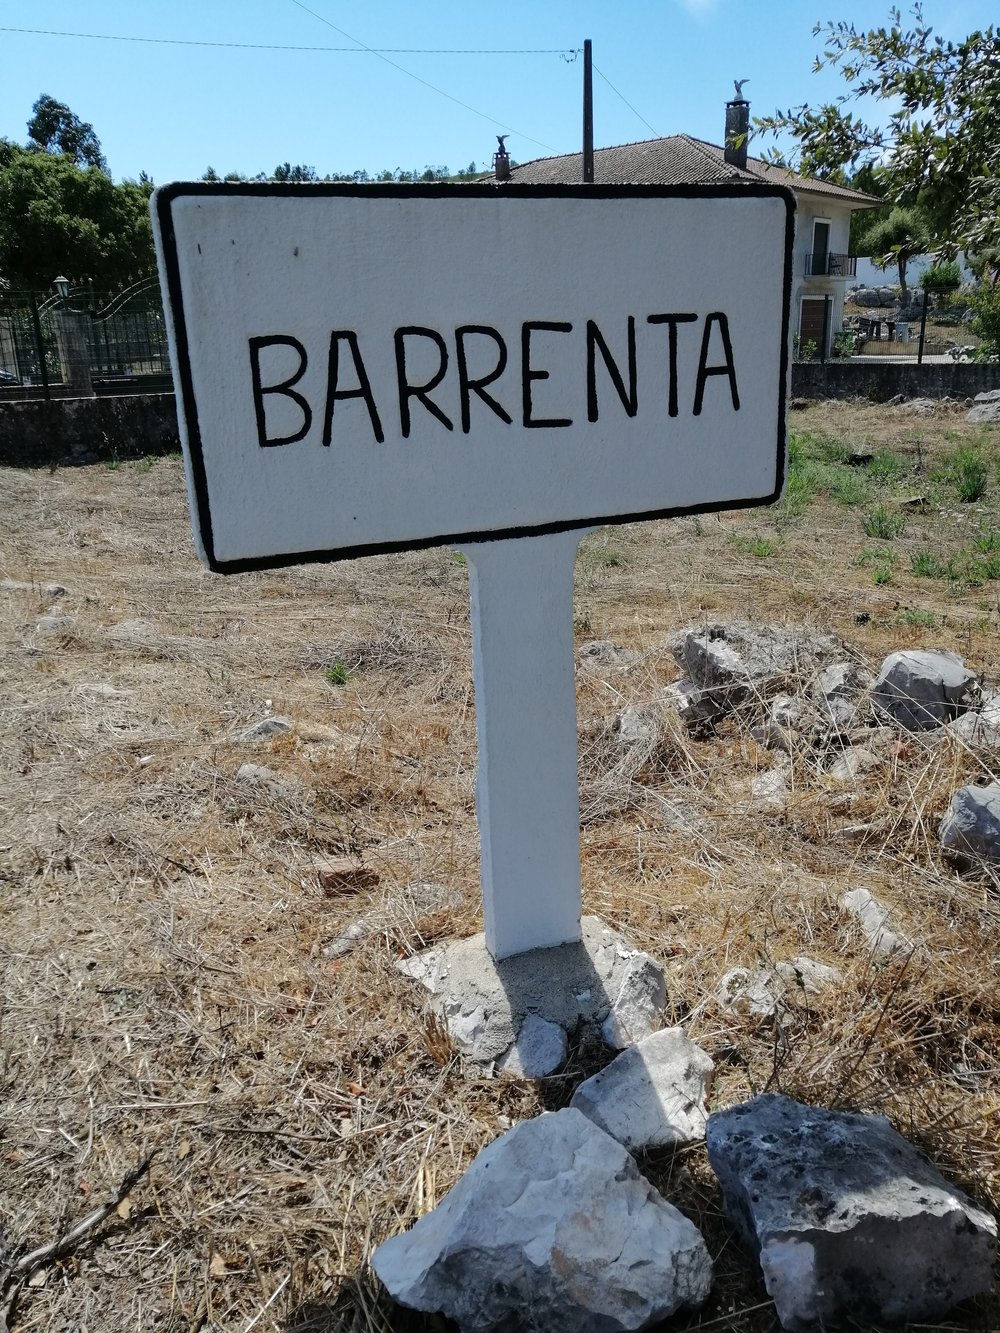 Barrenta-Portugal-Tiago-Martins-Agosto-Podcast.jpg